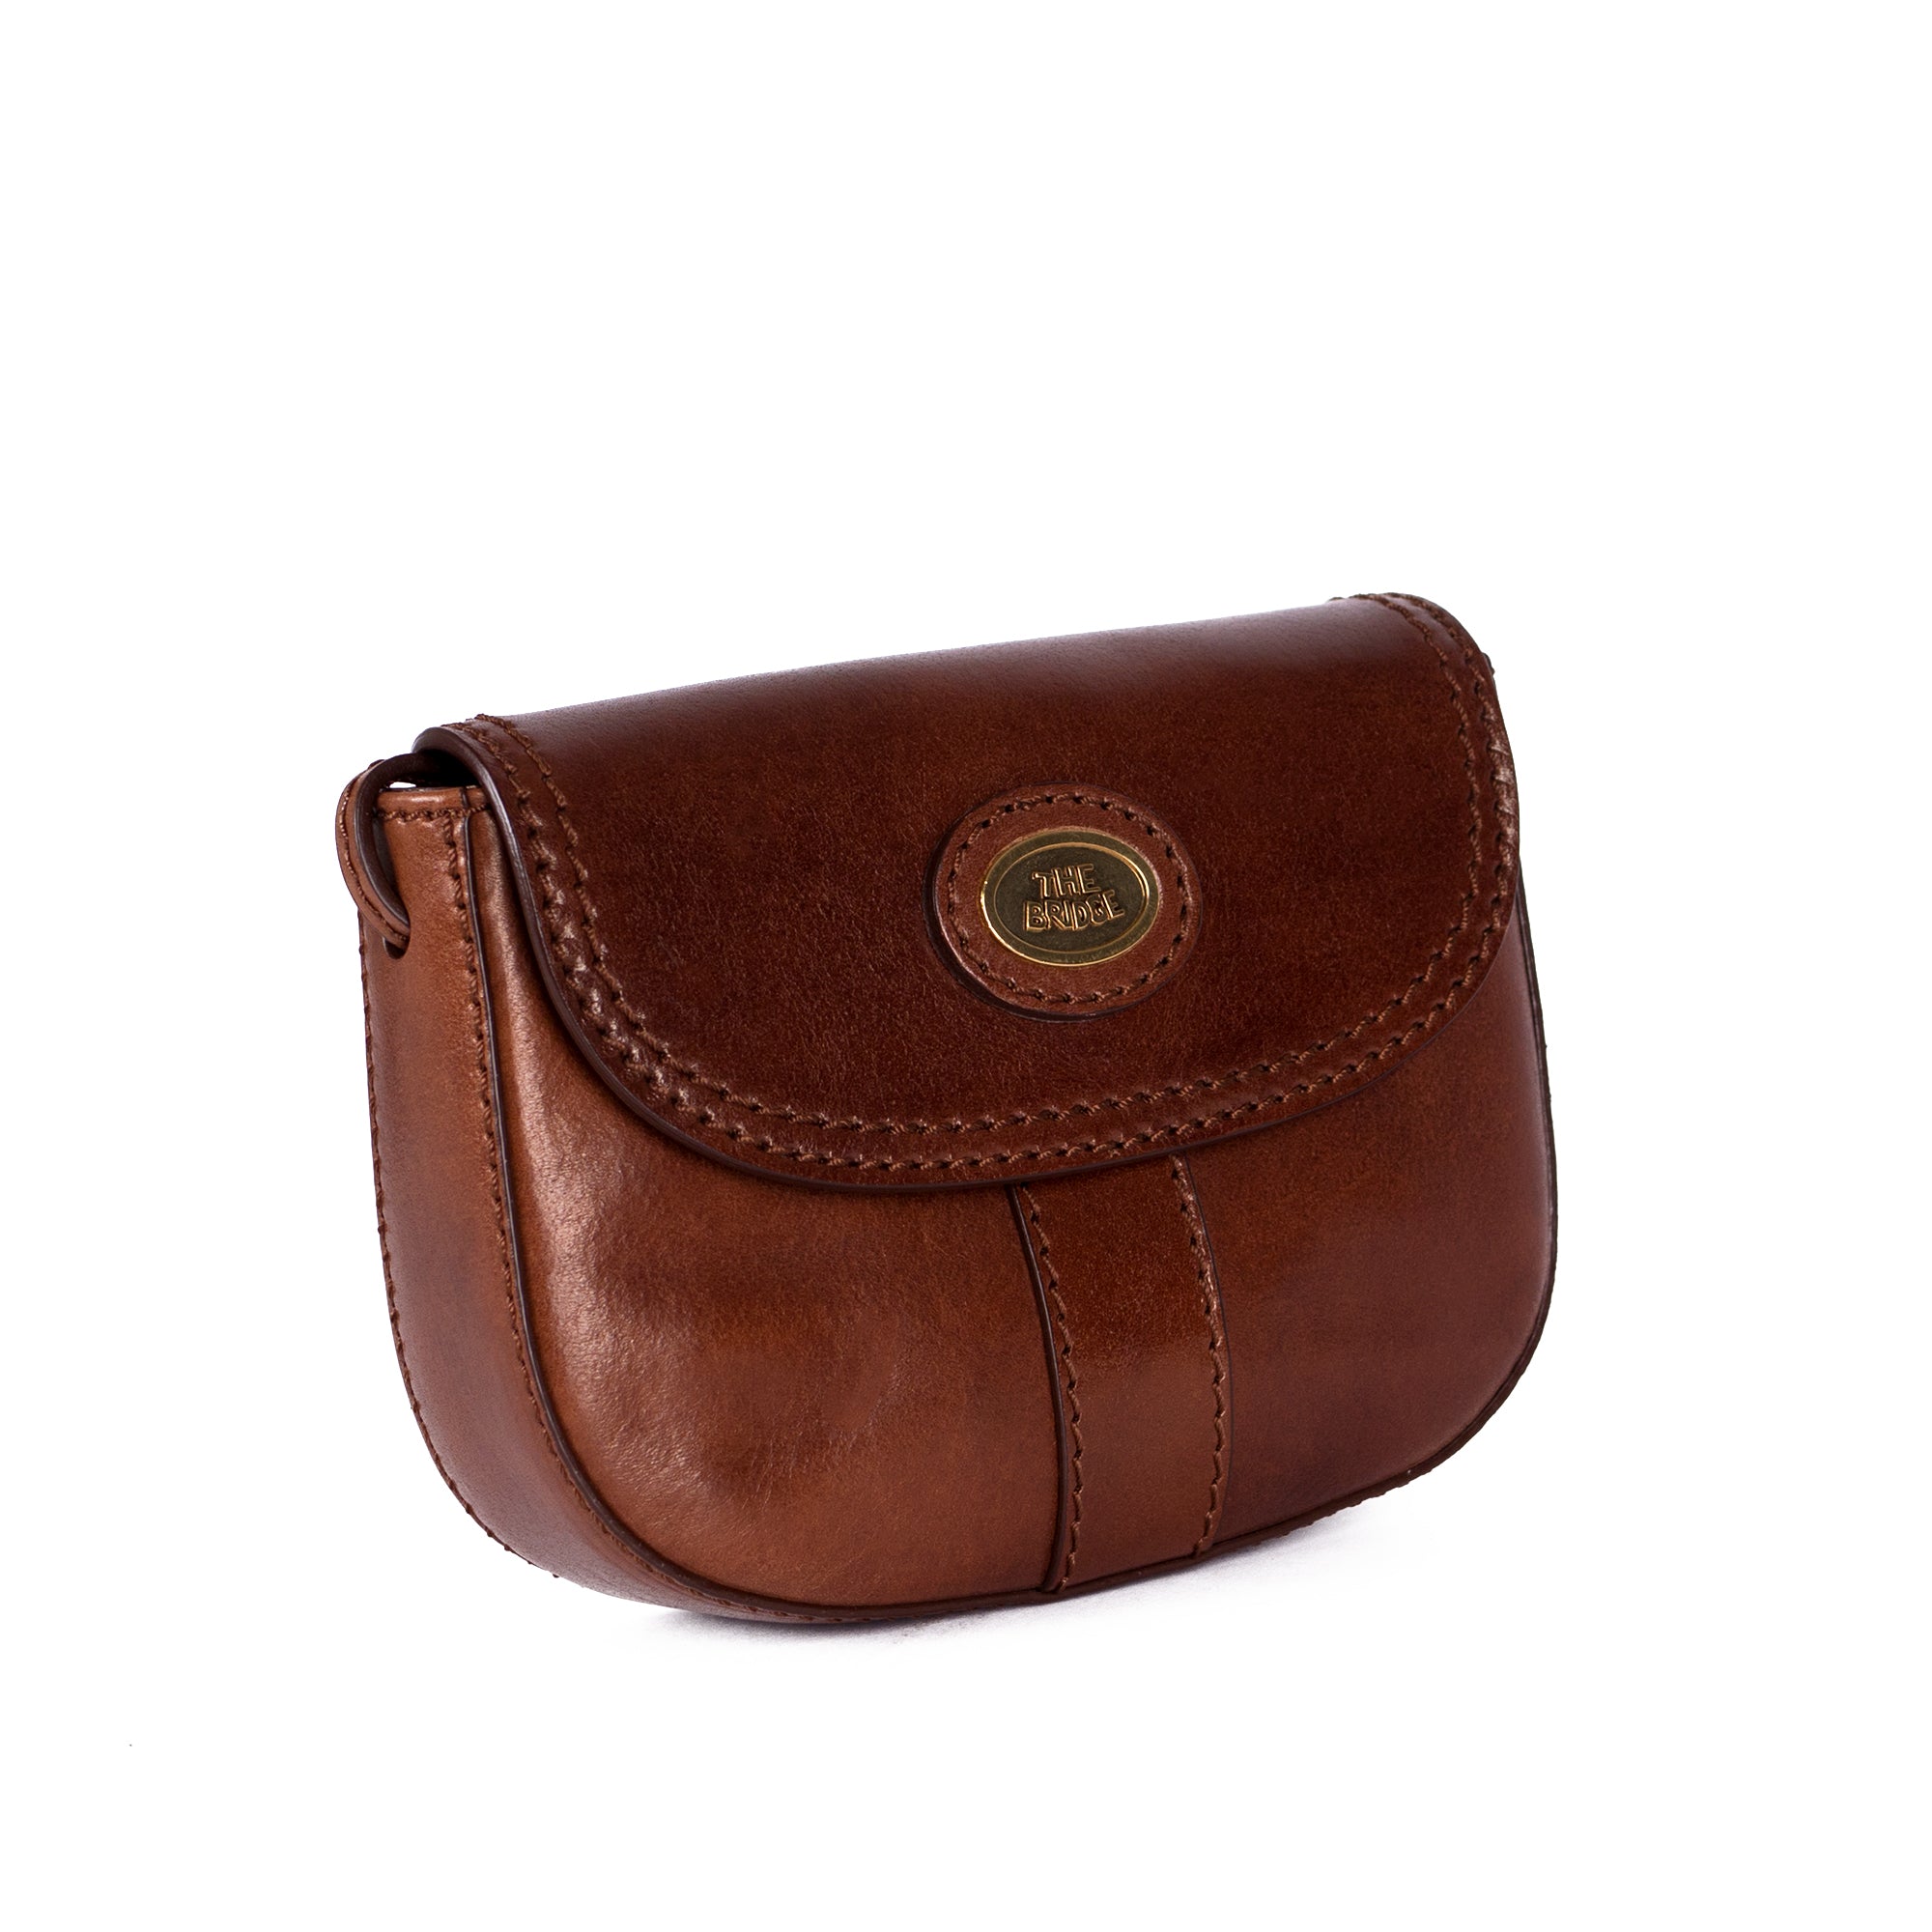 Calvin Klein Brown Leather Shoulder Handbag - Chickenmash Farm